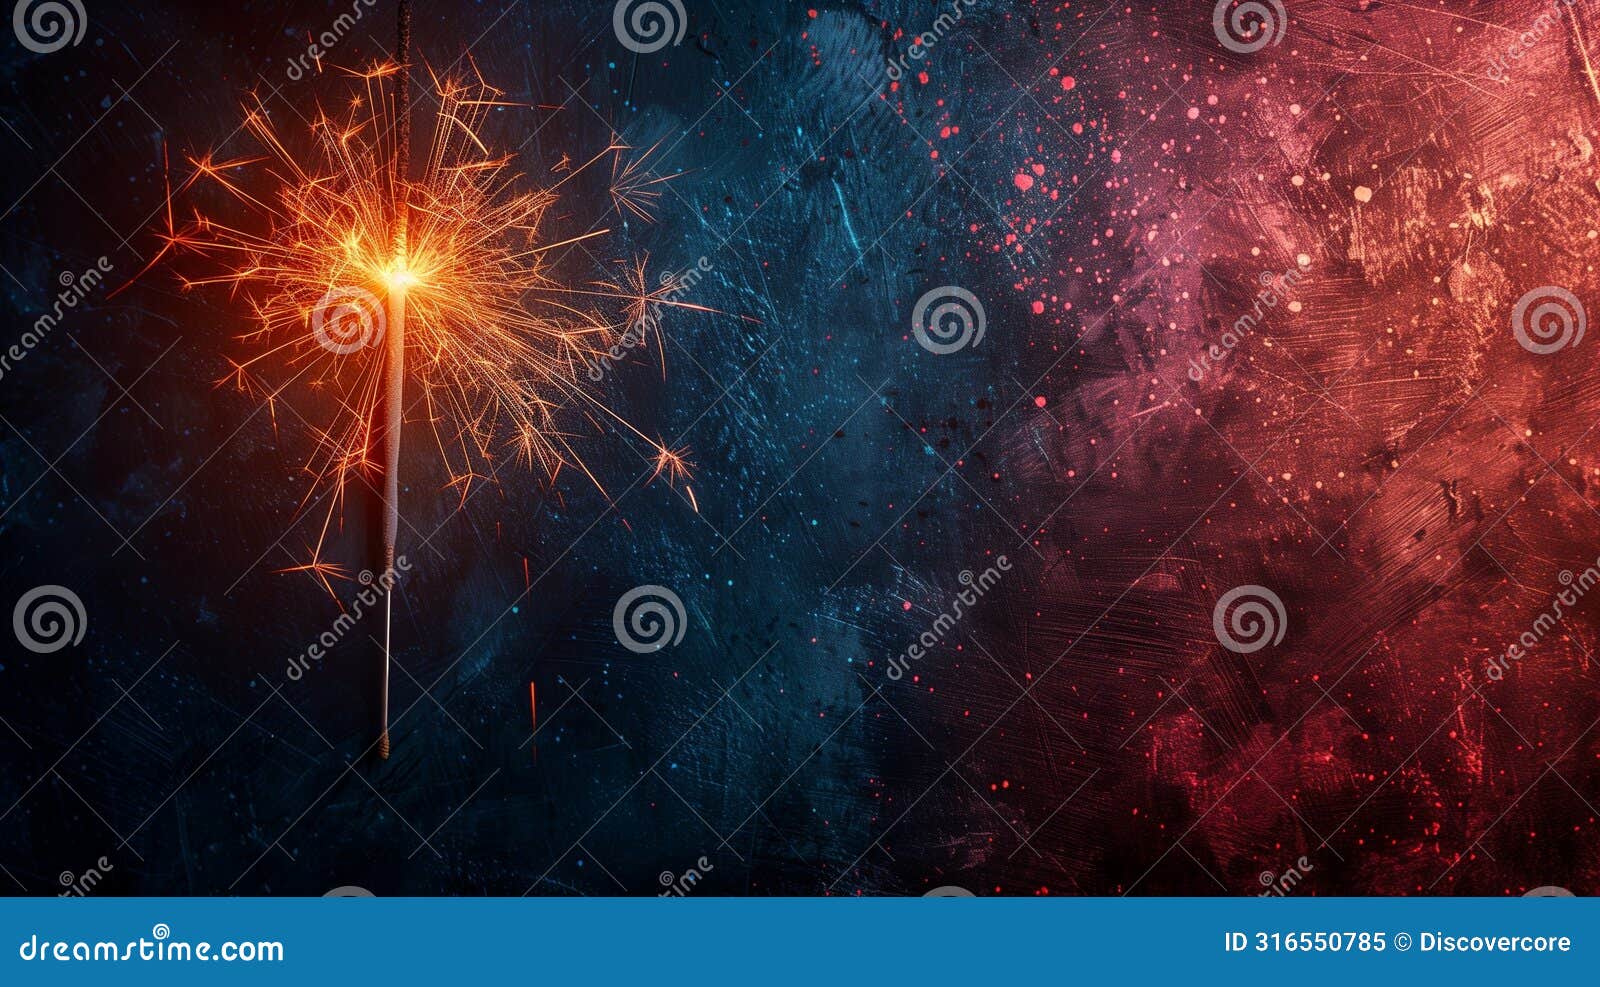 sparkler magic: vivid celebration background